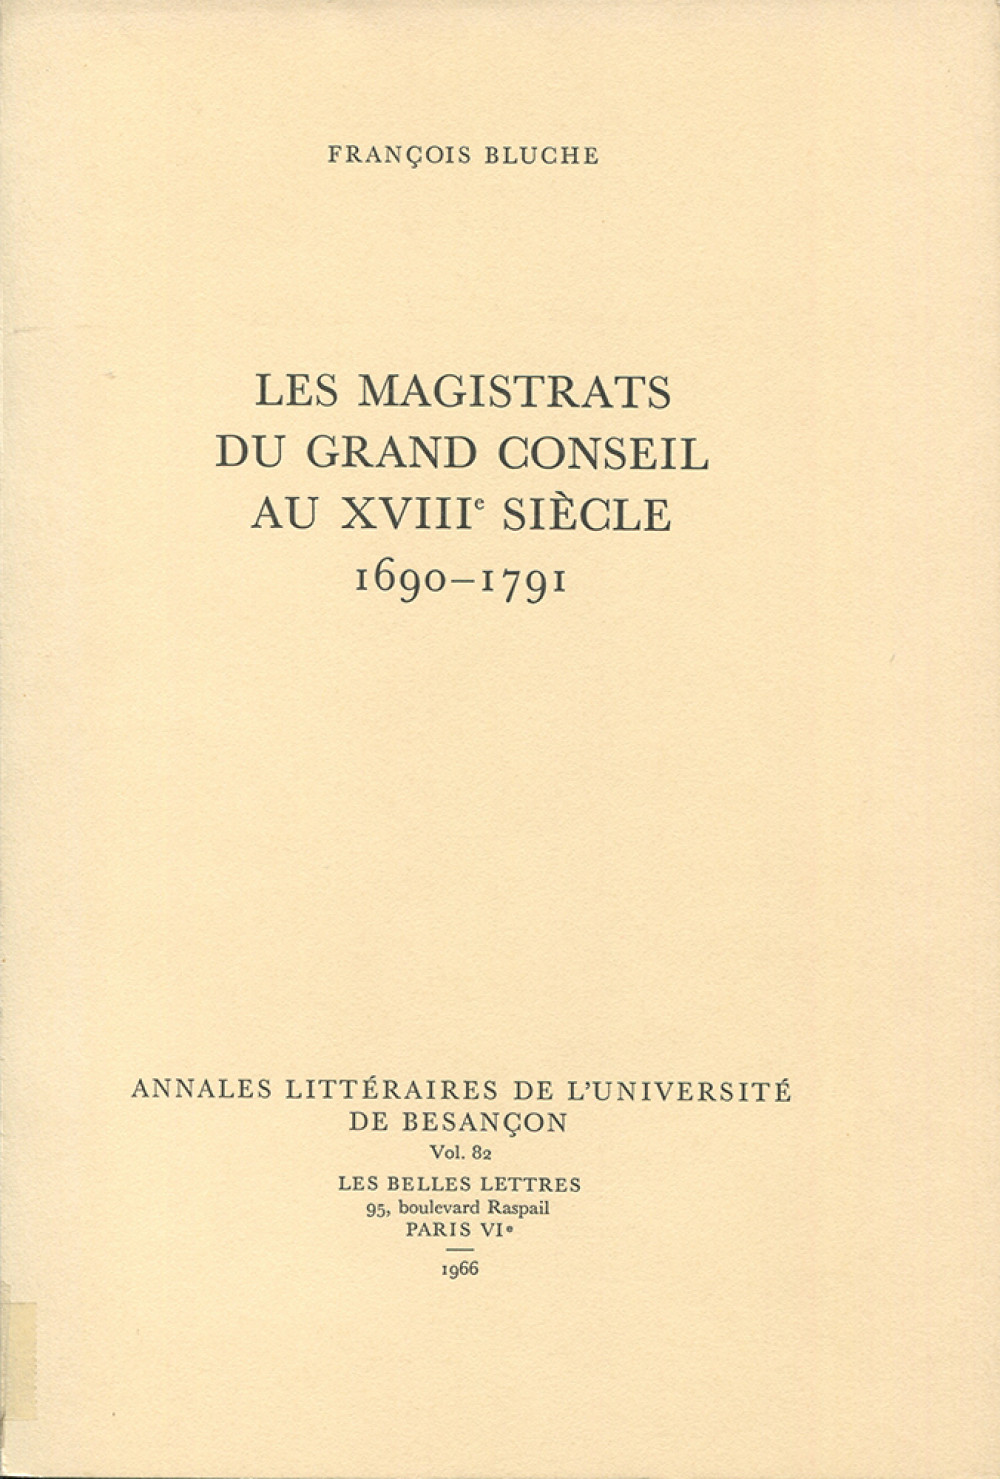 Les magistrats du grand conseil au XVIIIe siècle (1690-1791)